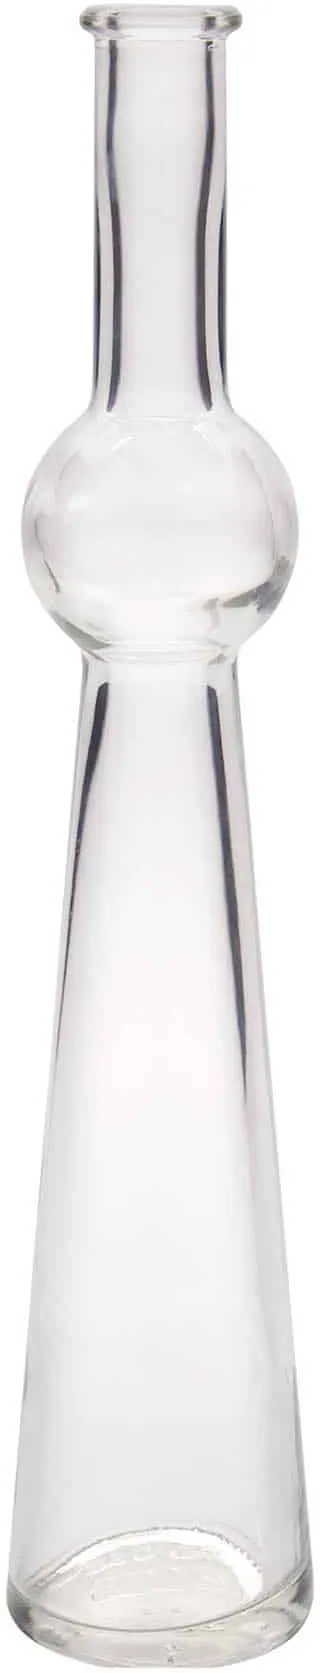 Botella de vidrio 'Supernova' de 200 ml, boca: corcho